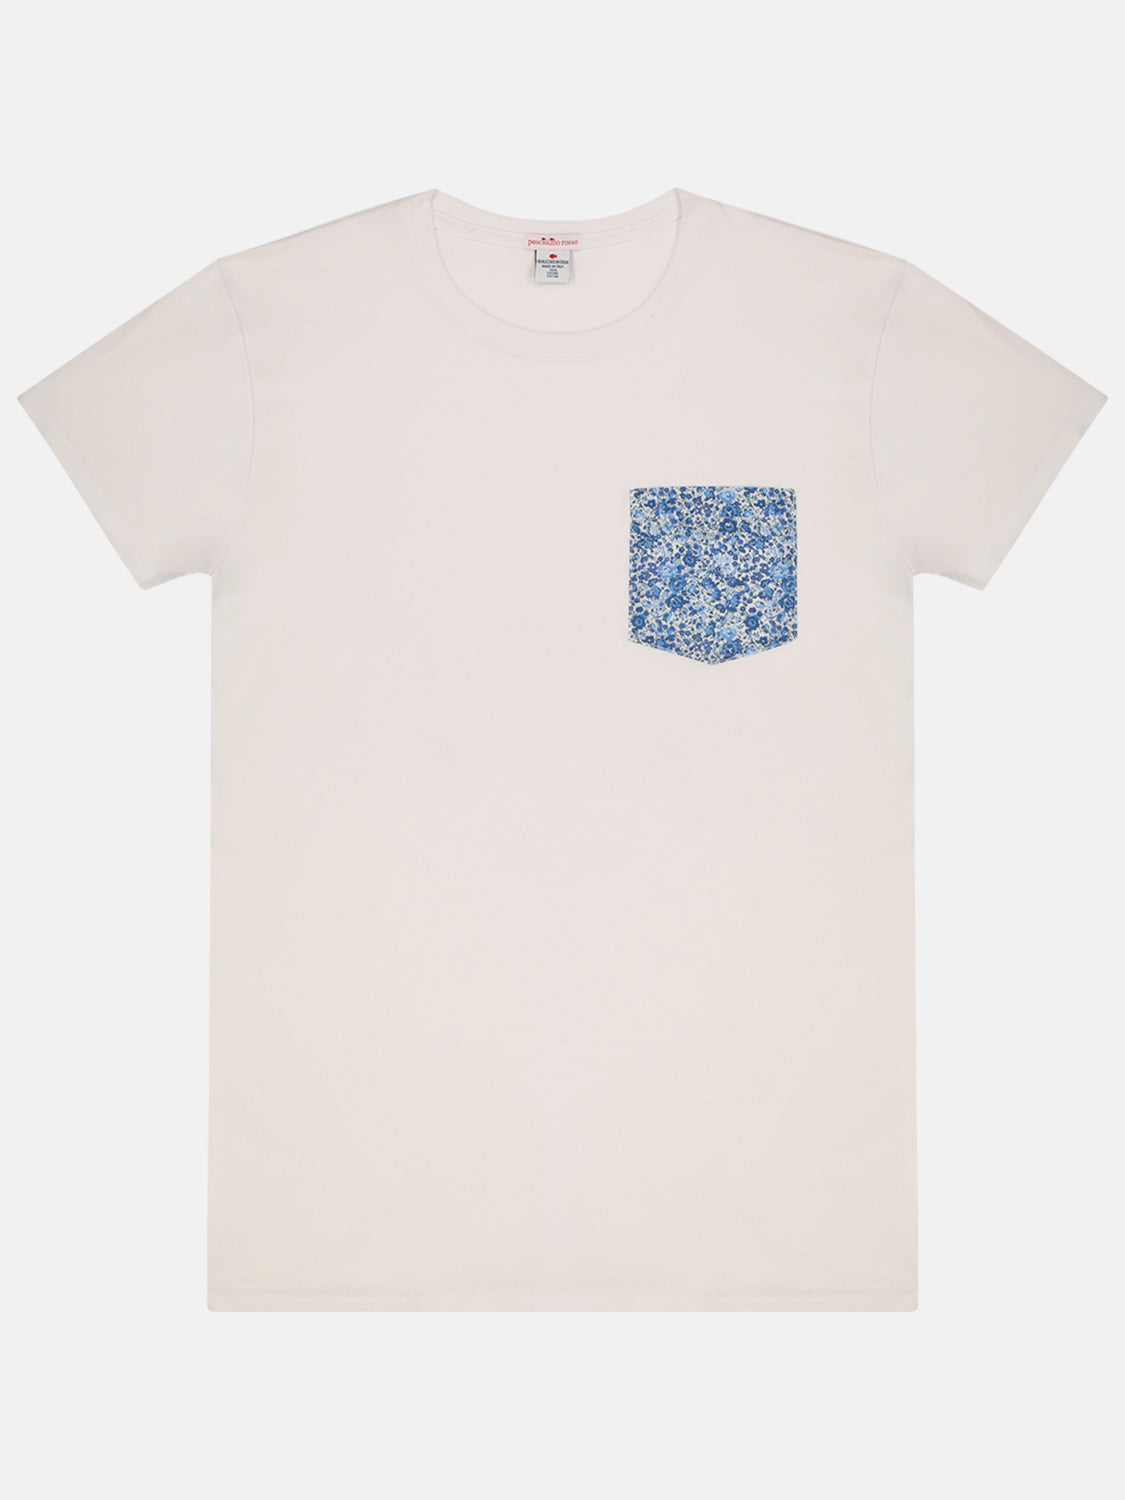 T-Shirt Uomo Fiori Blu